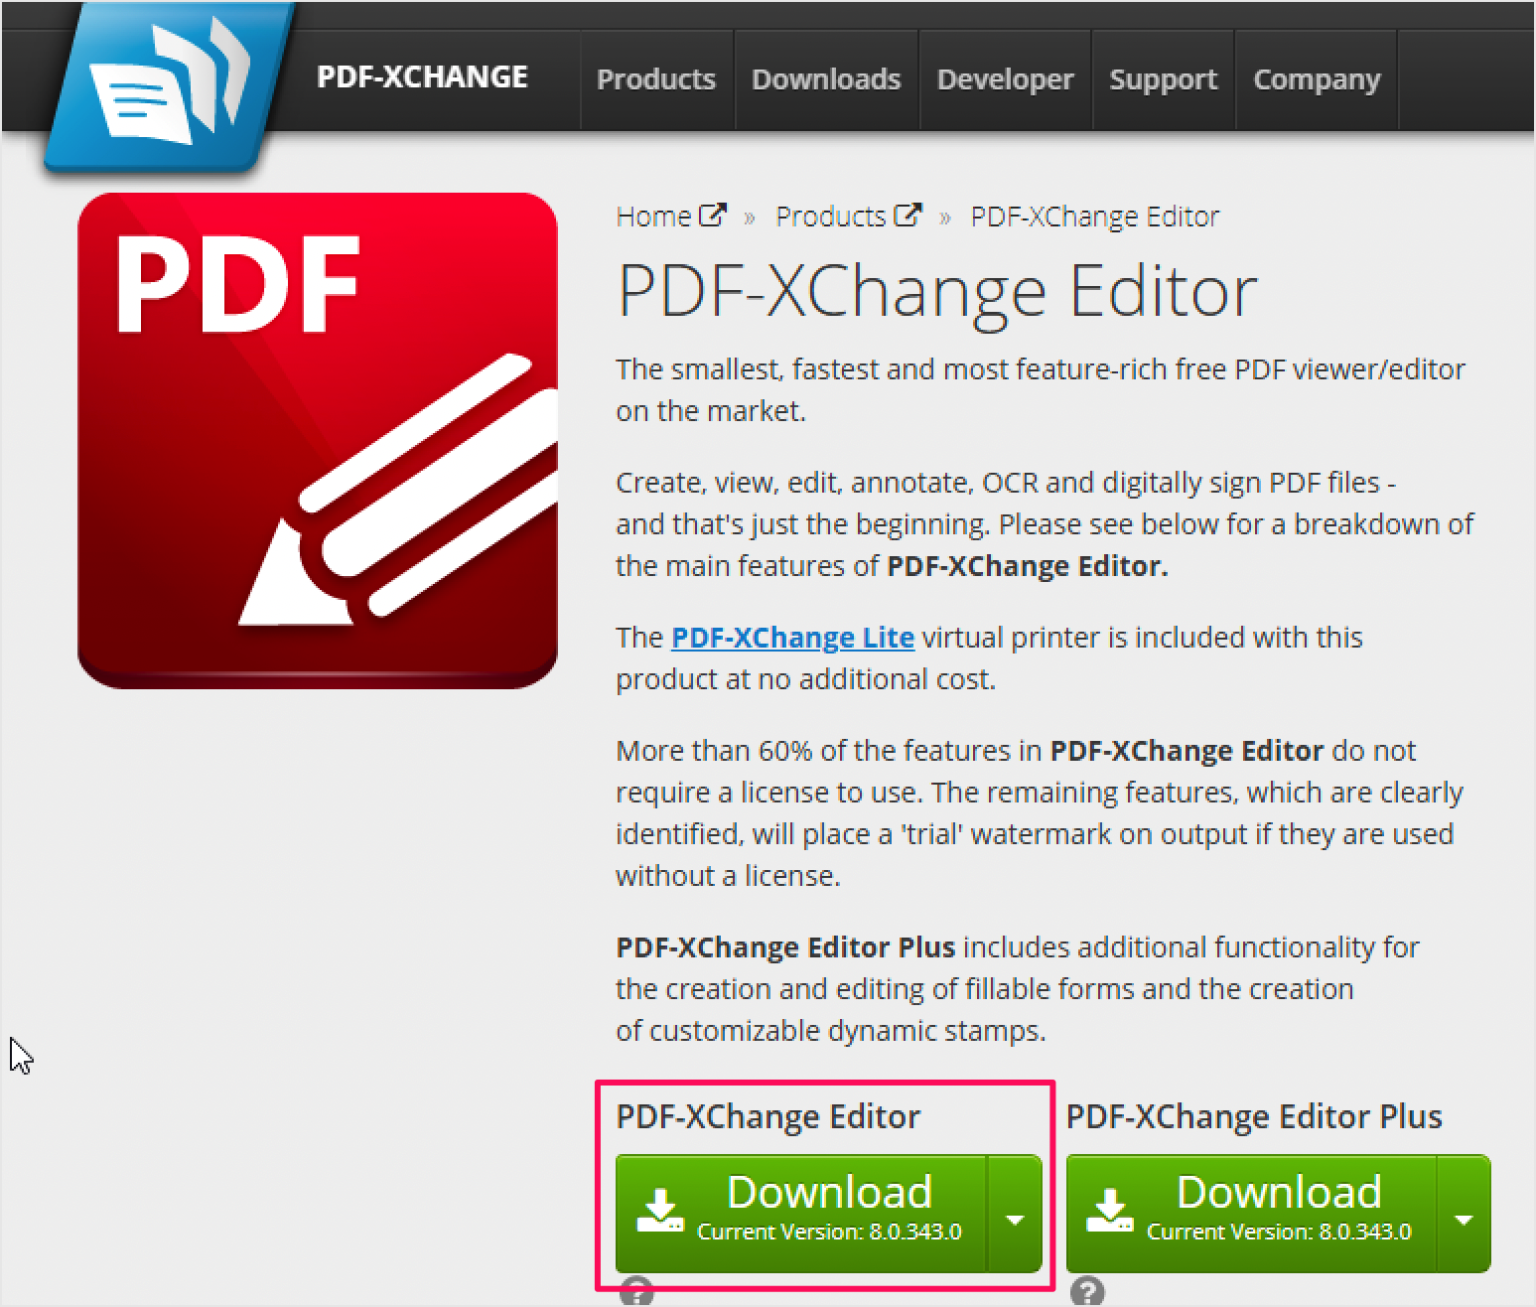 instal the last version for ios PDF-XChange Editor Plus/Pro 10.1.2.382.0